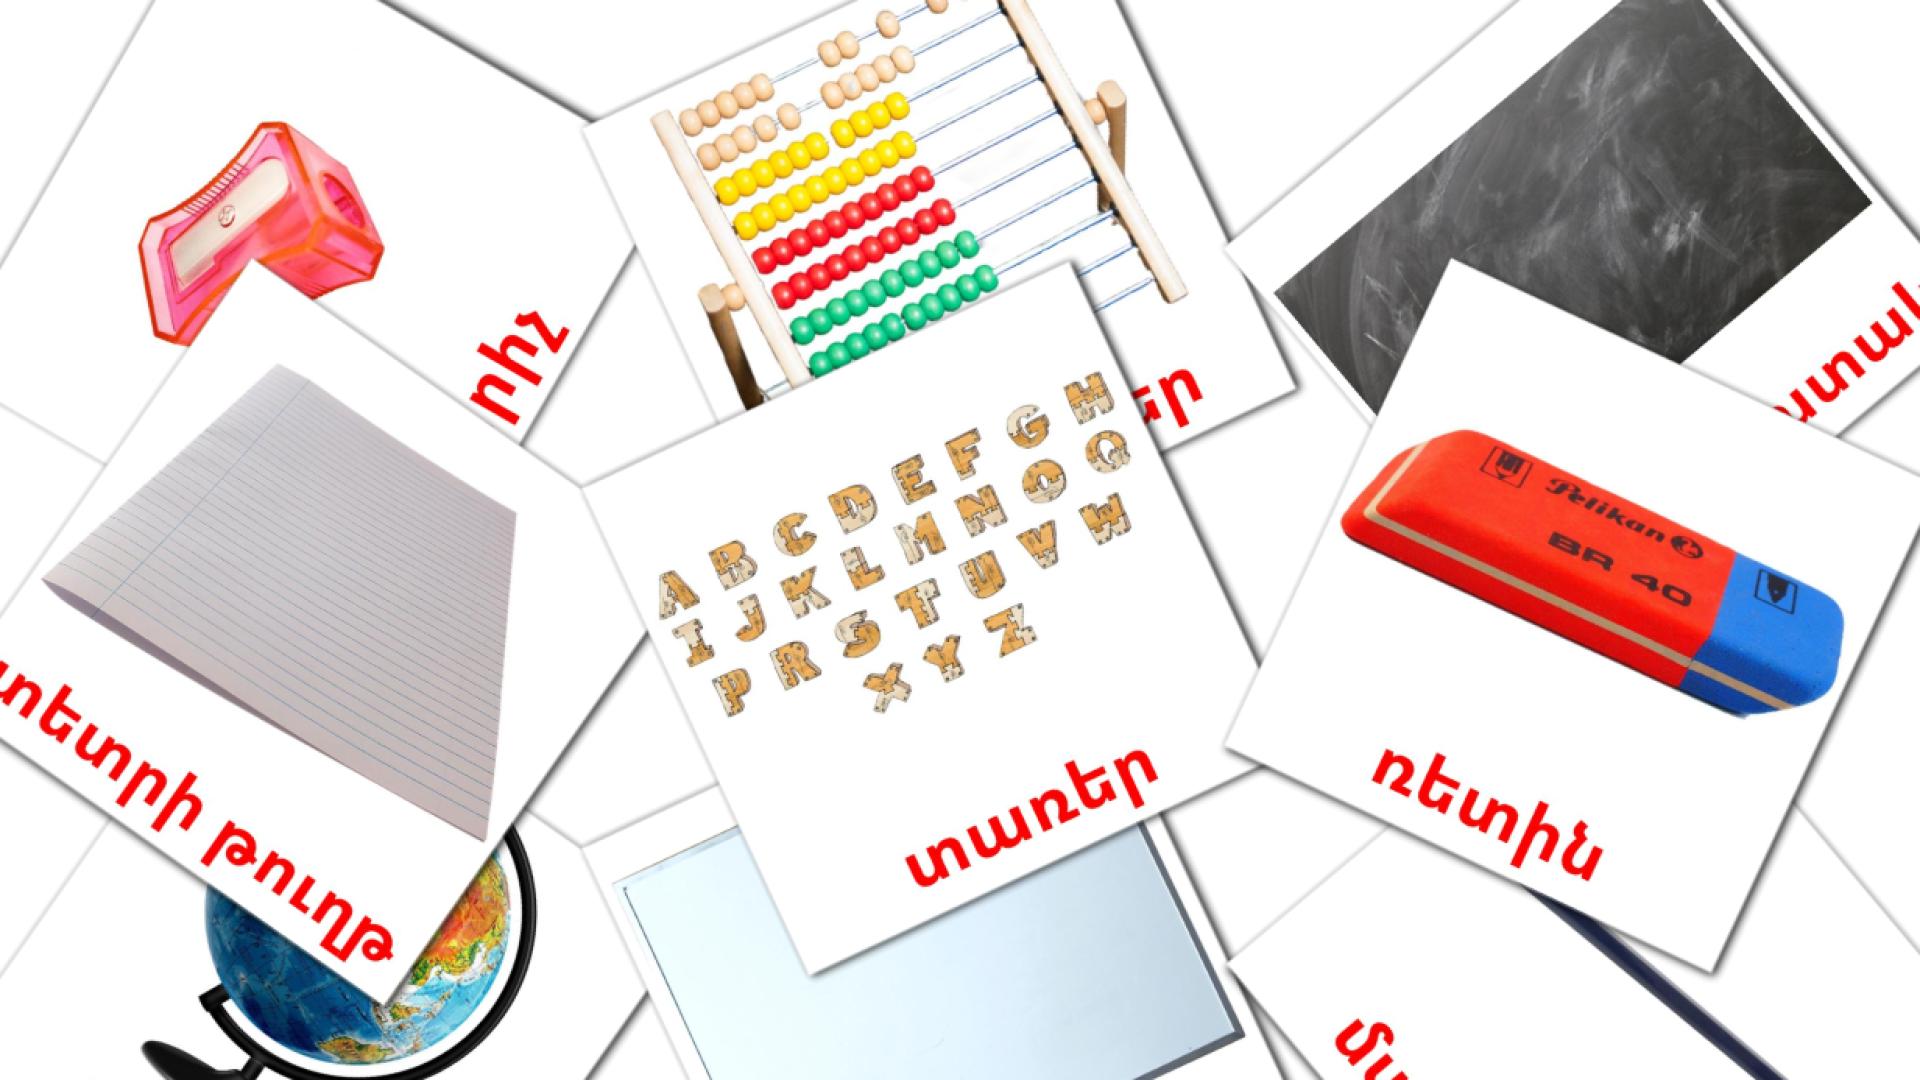 Classroom objects - armenian vocabulary cards